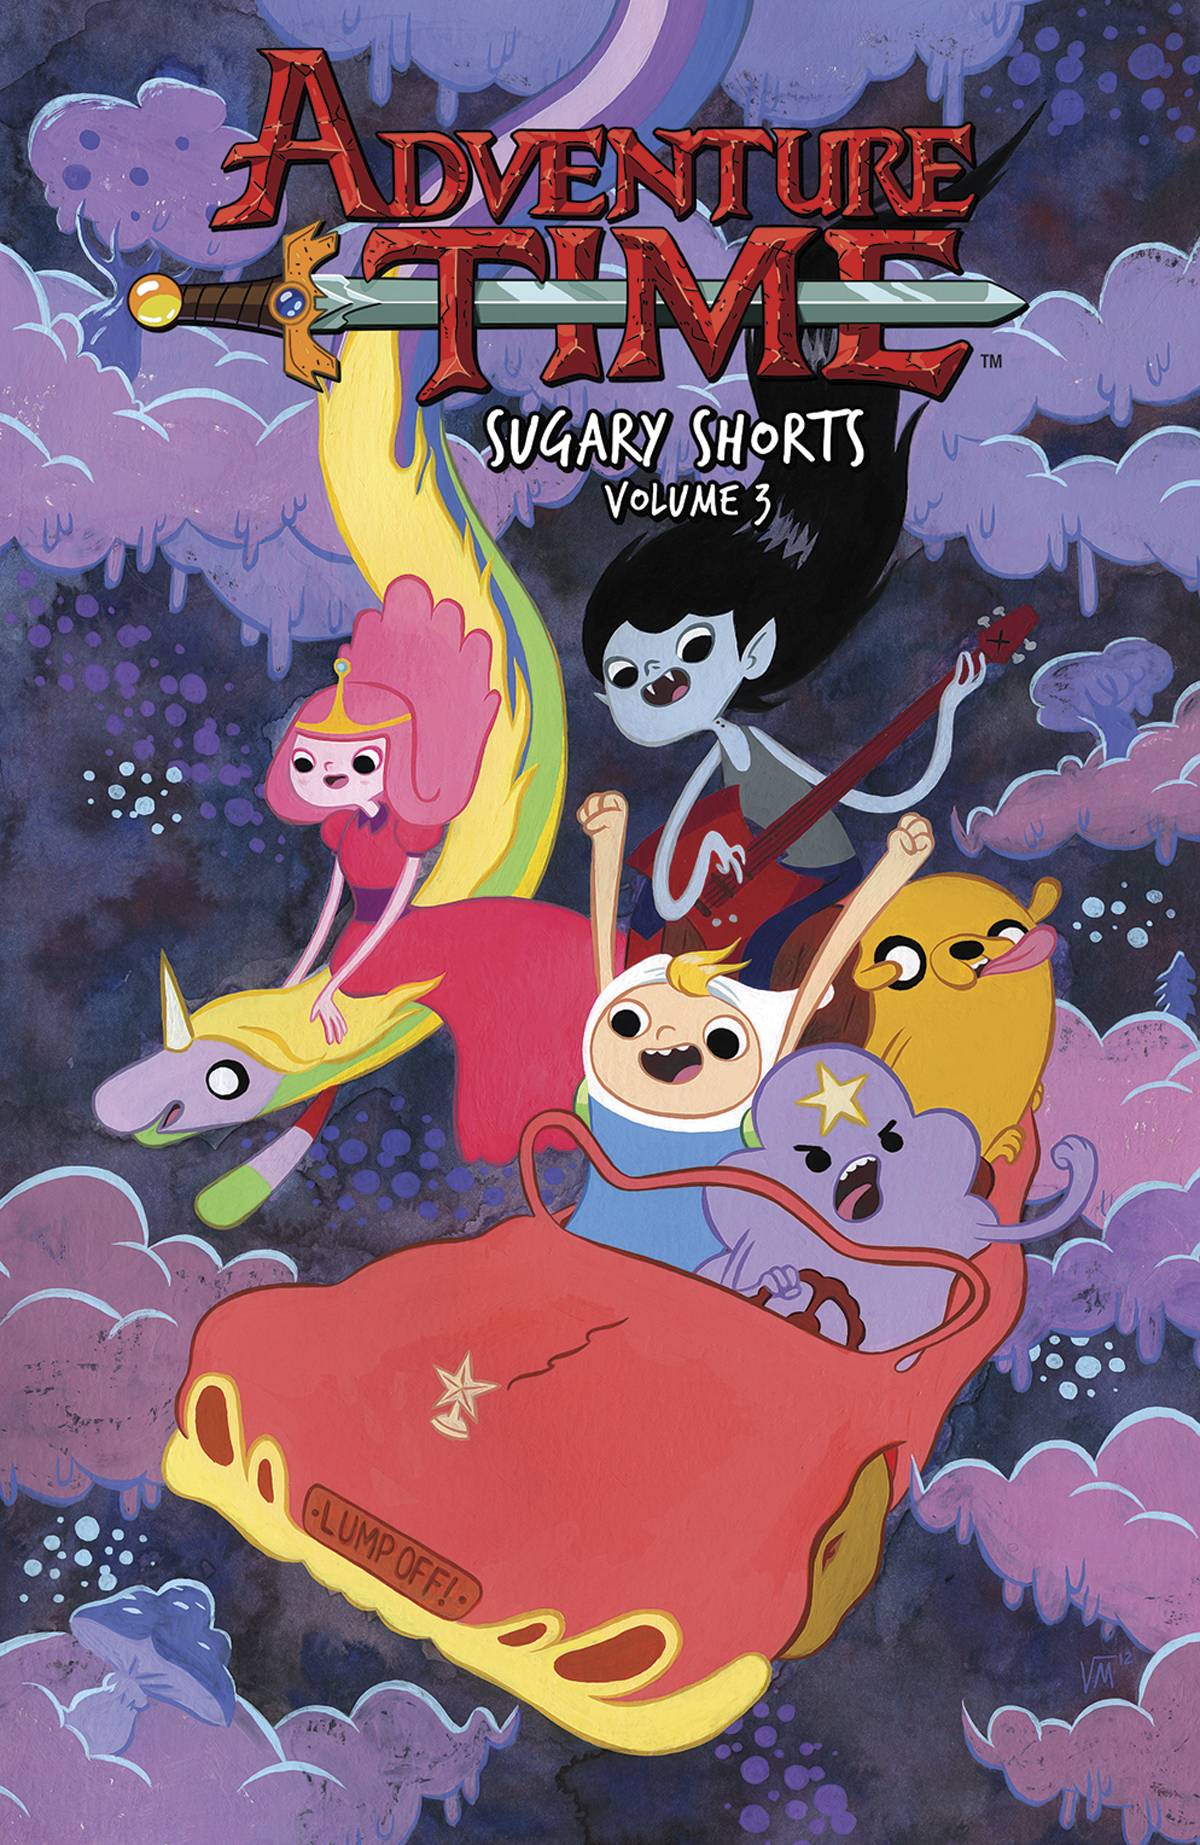 Adventure Time Sugary Shorts Graphic Novel Volume 3